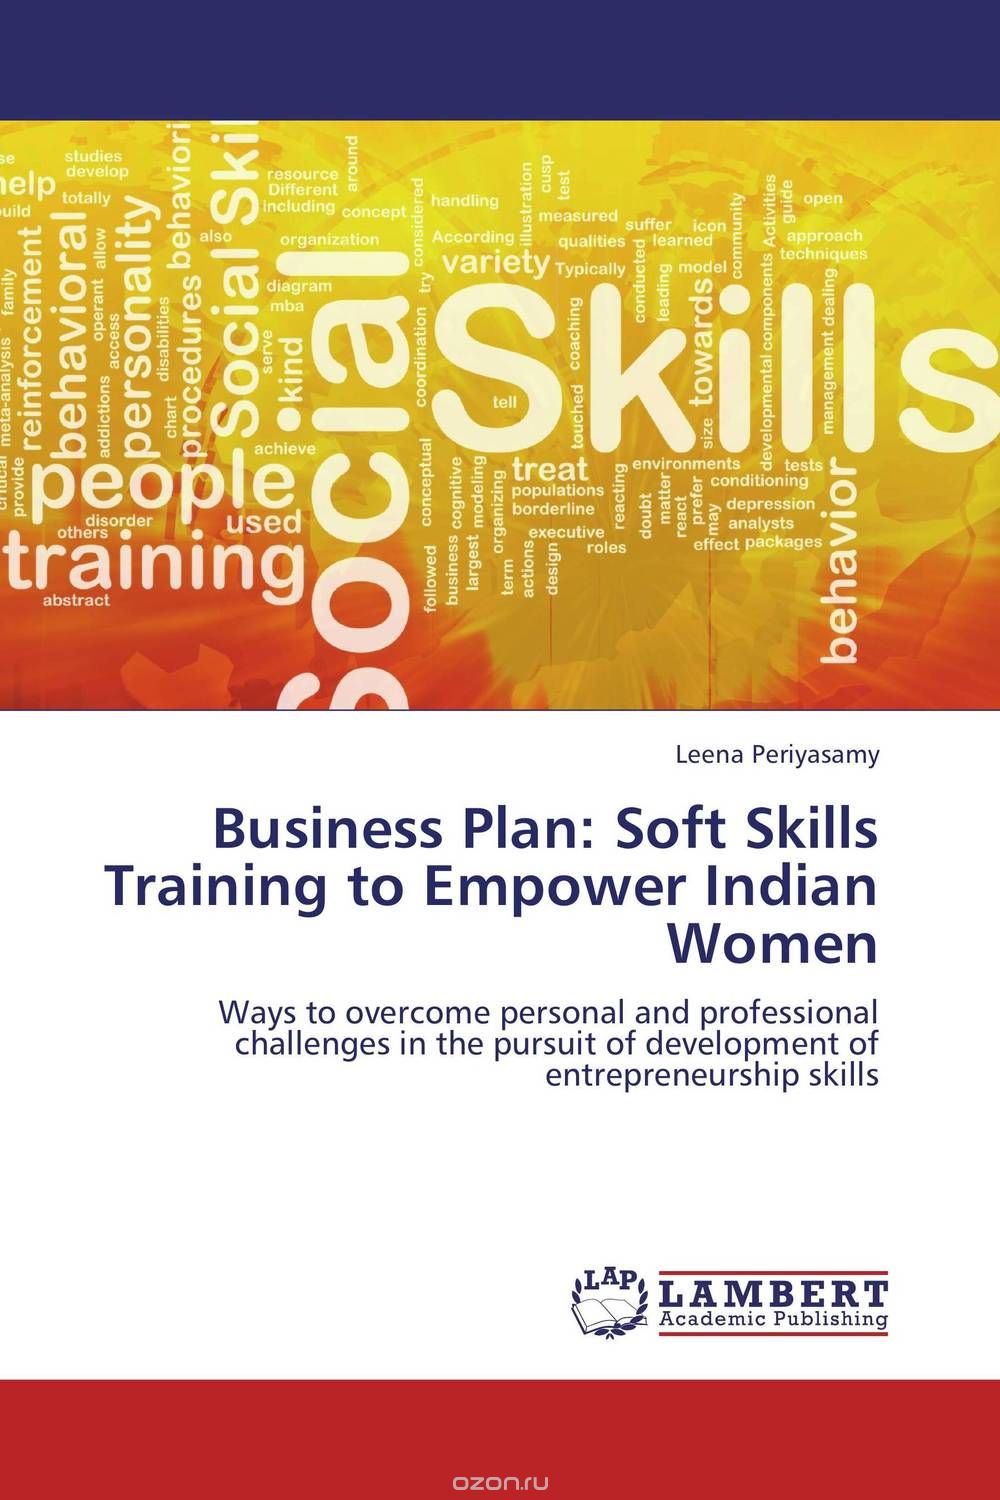 Скачать книгу "Business Plan: Soft Skills Training to Empower Indian Women"